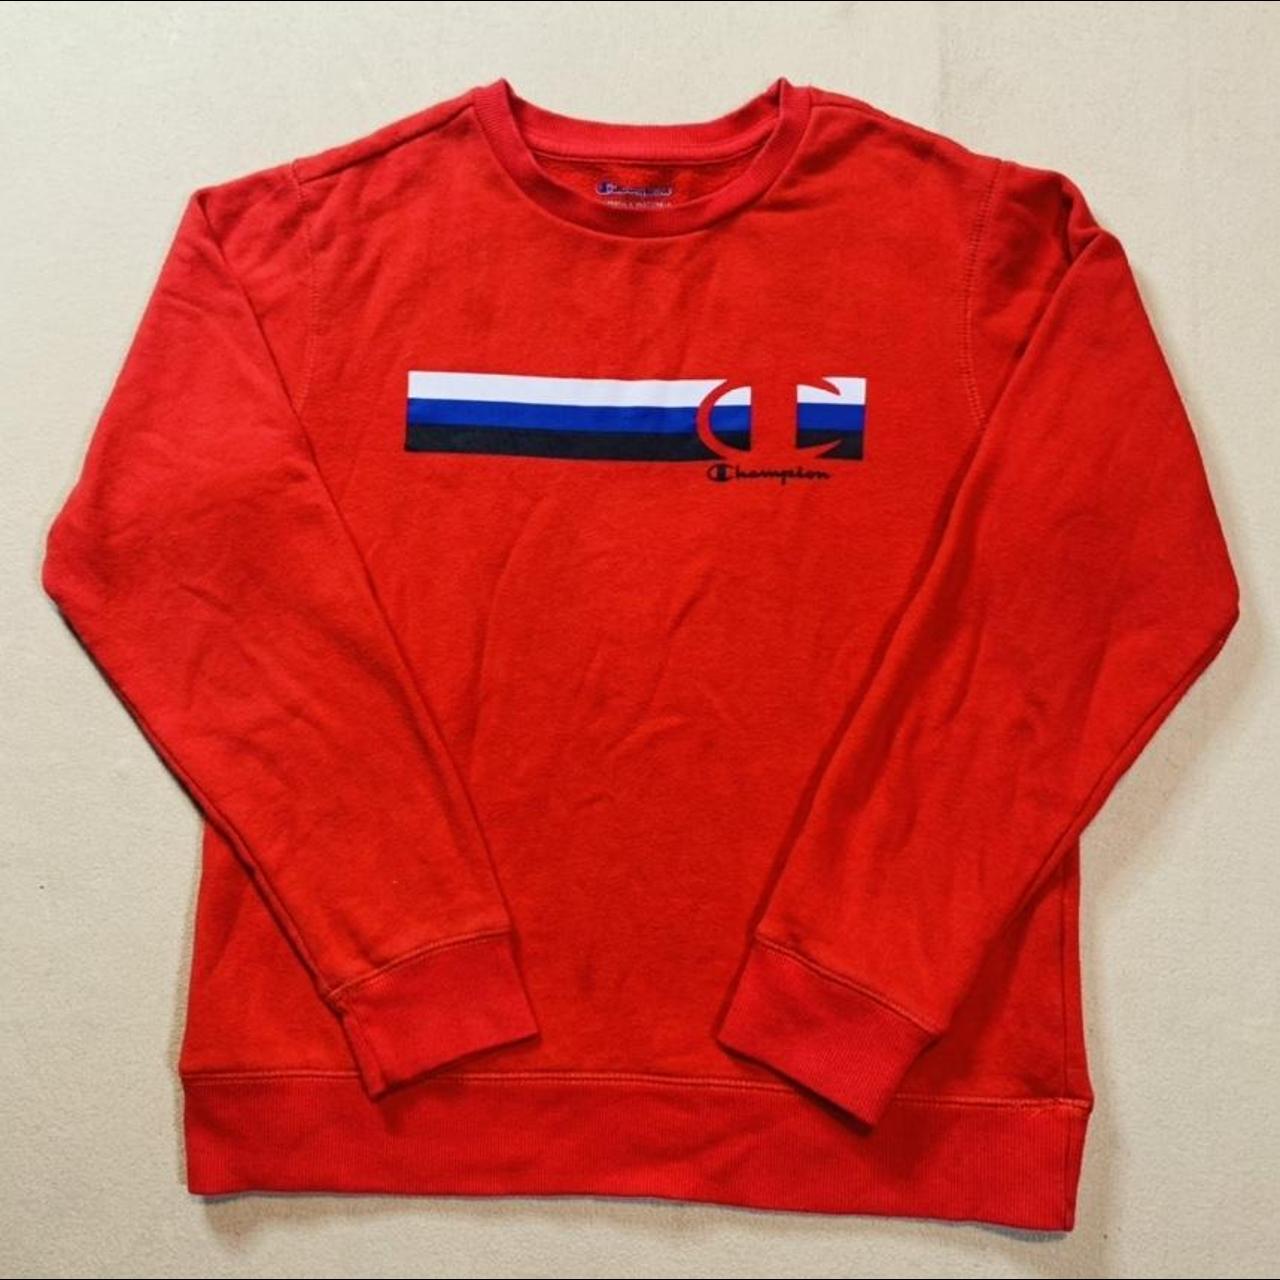 Youth Red Champion Crewneck Sweatshirt in good... - Depop